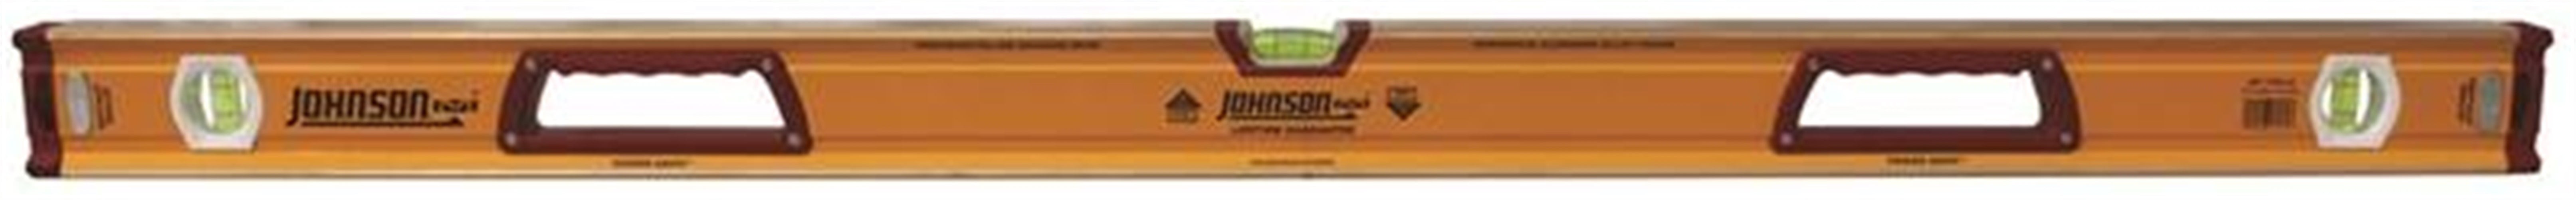 Johnson Level and Tool 1707-4800 48-Inch GloView Box Beam Level 